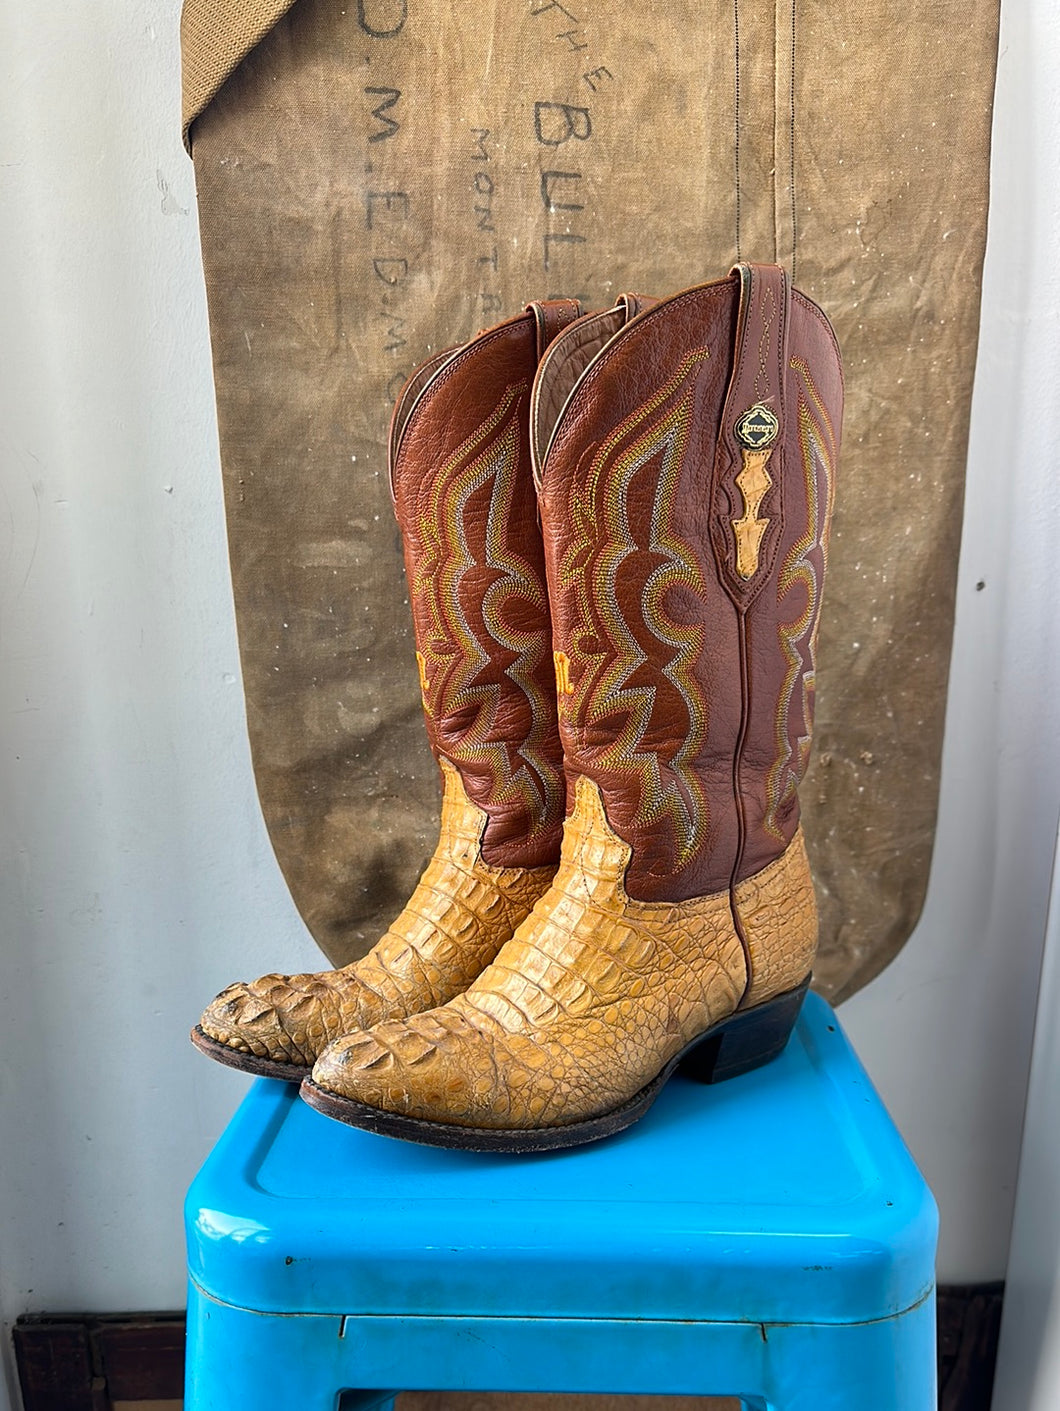 Montenegro Alligator Cowboy Boots - Size 7 M 8.5 W